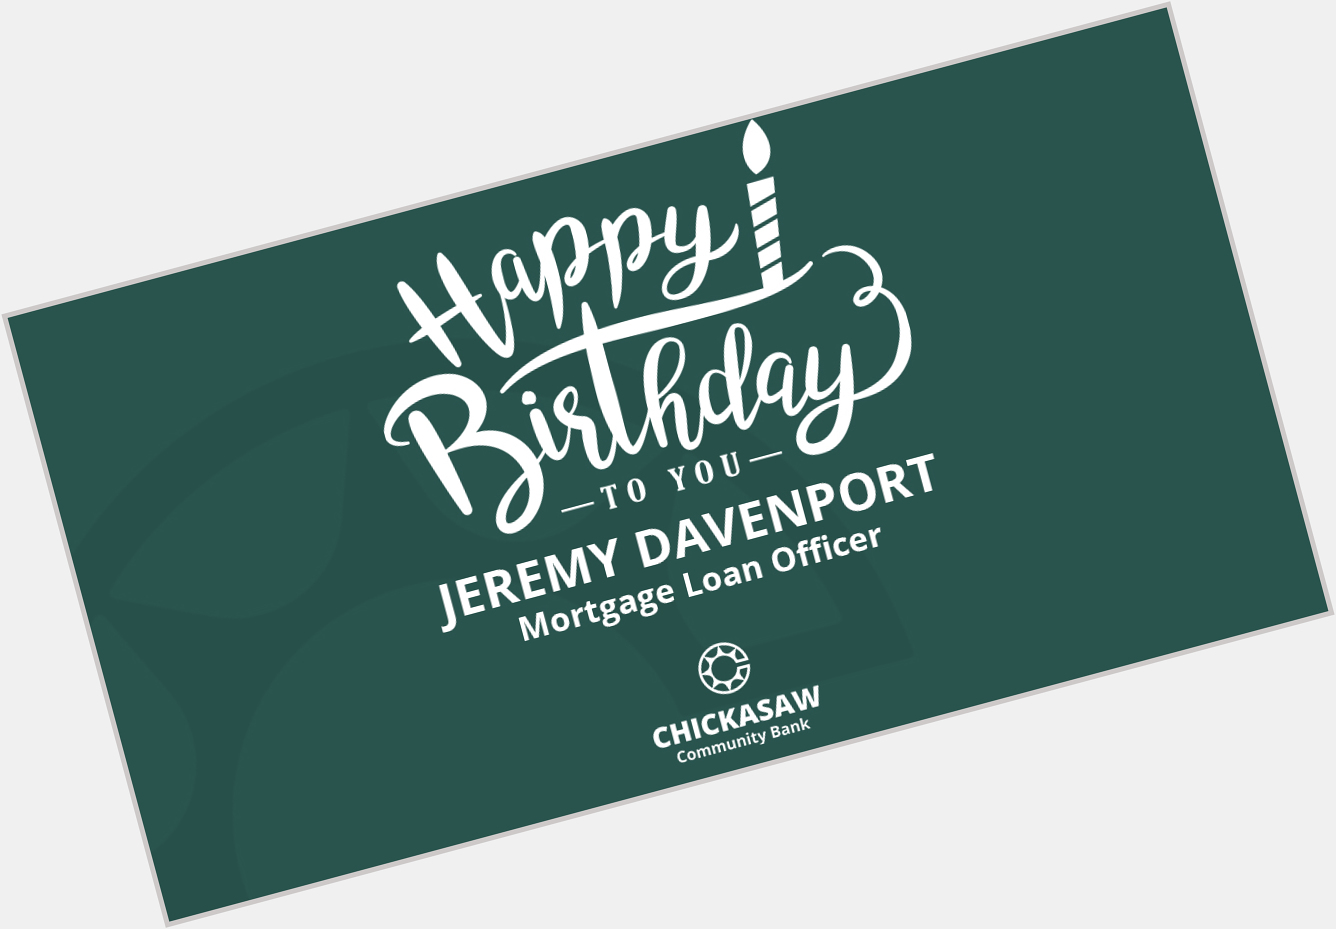 Mortgage Loan Officer, Jeremy Davenport, is celebrating his birthday today. Happy Birthday, Jeremy! 